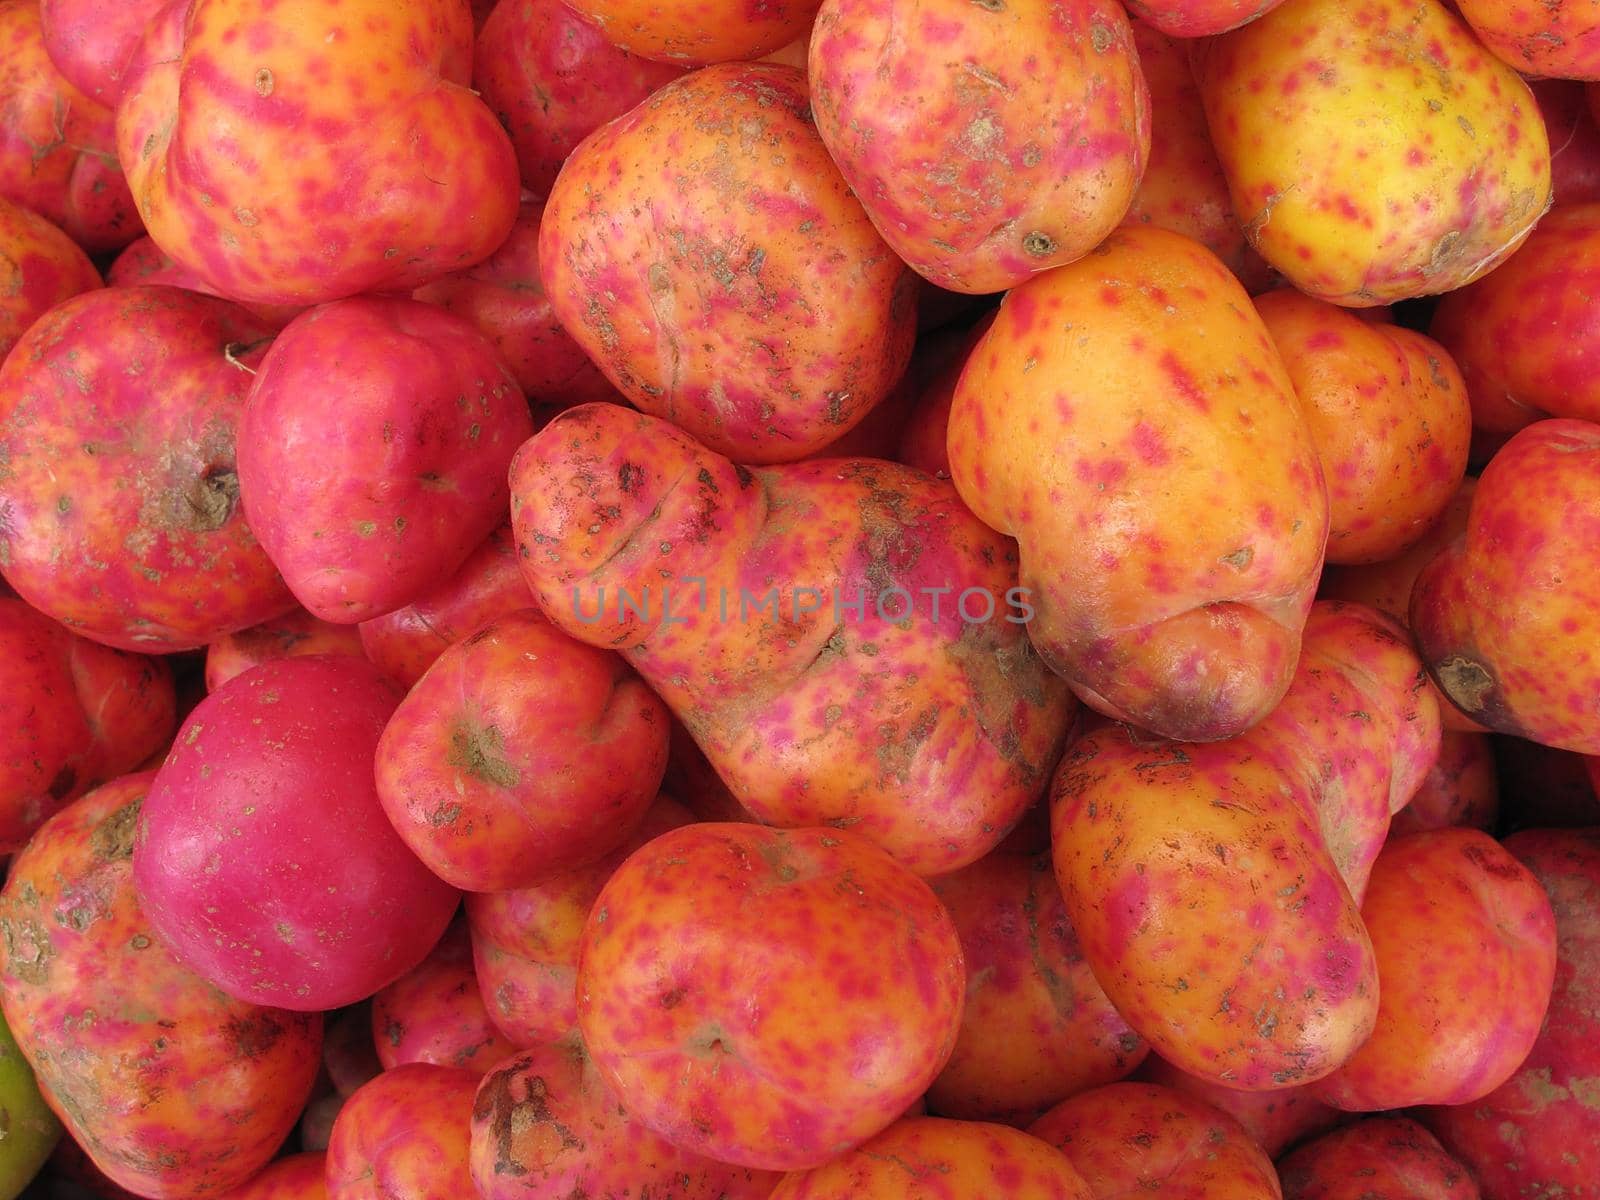 Fresh Red Potatoes by aroas